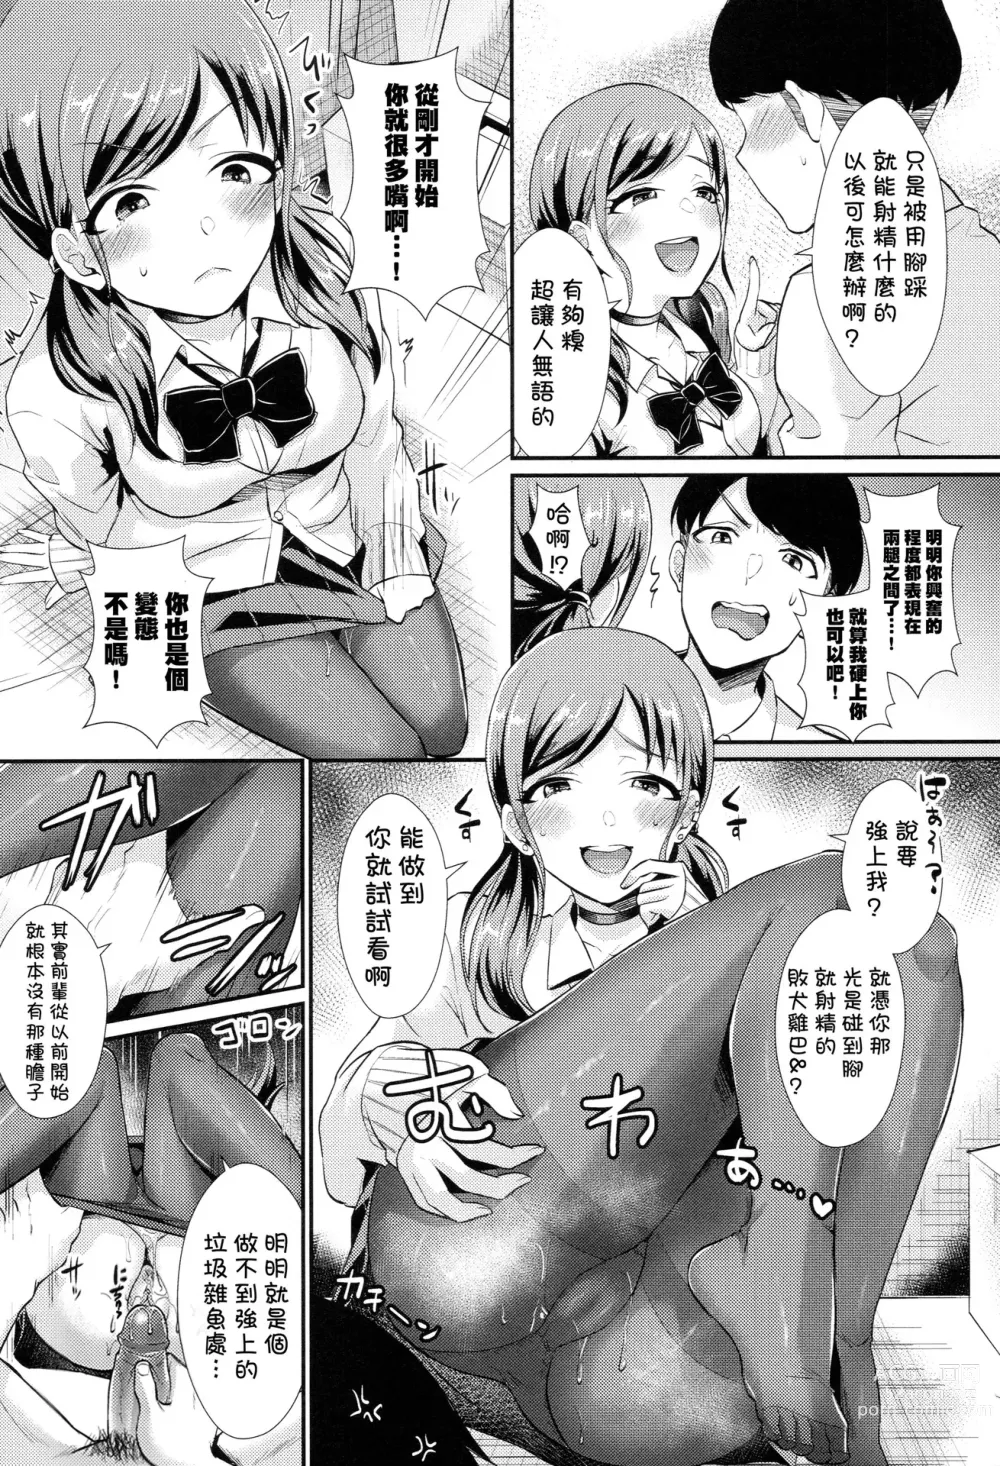 Page 14 of manga Otome Initiative - Girls Initiative (uncensored)